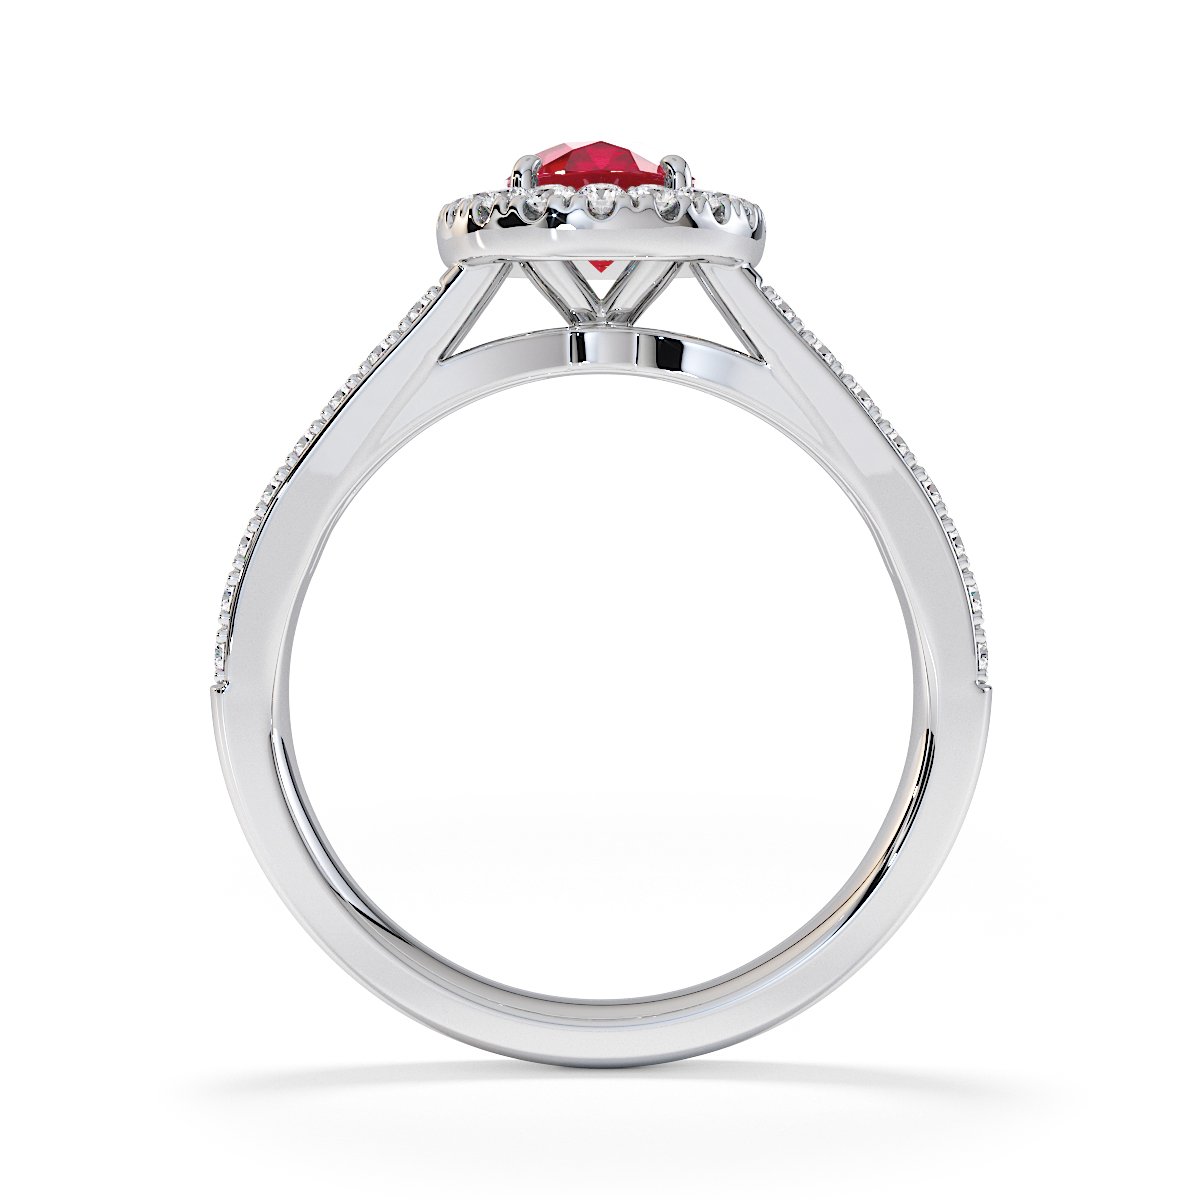 Gold / Platinum Ruby and Diamond Engagement Ring RZ3461